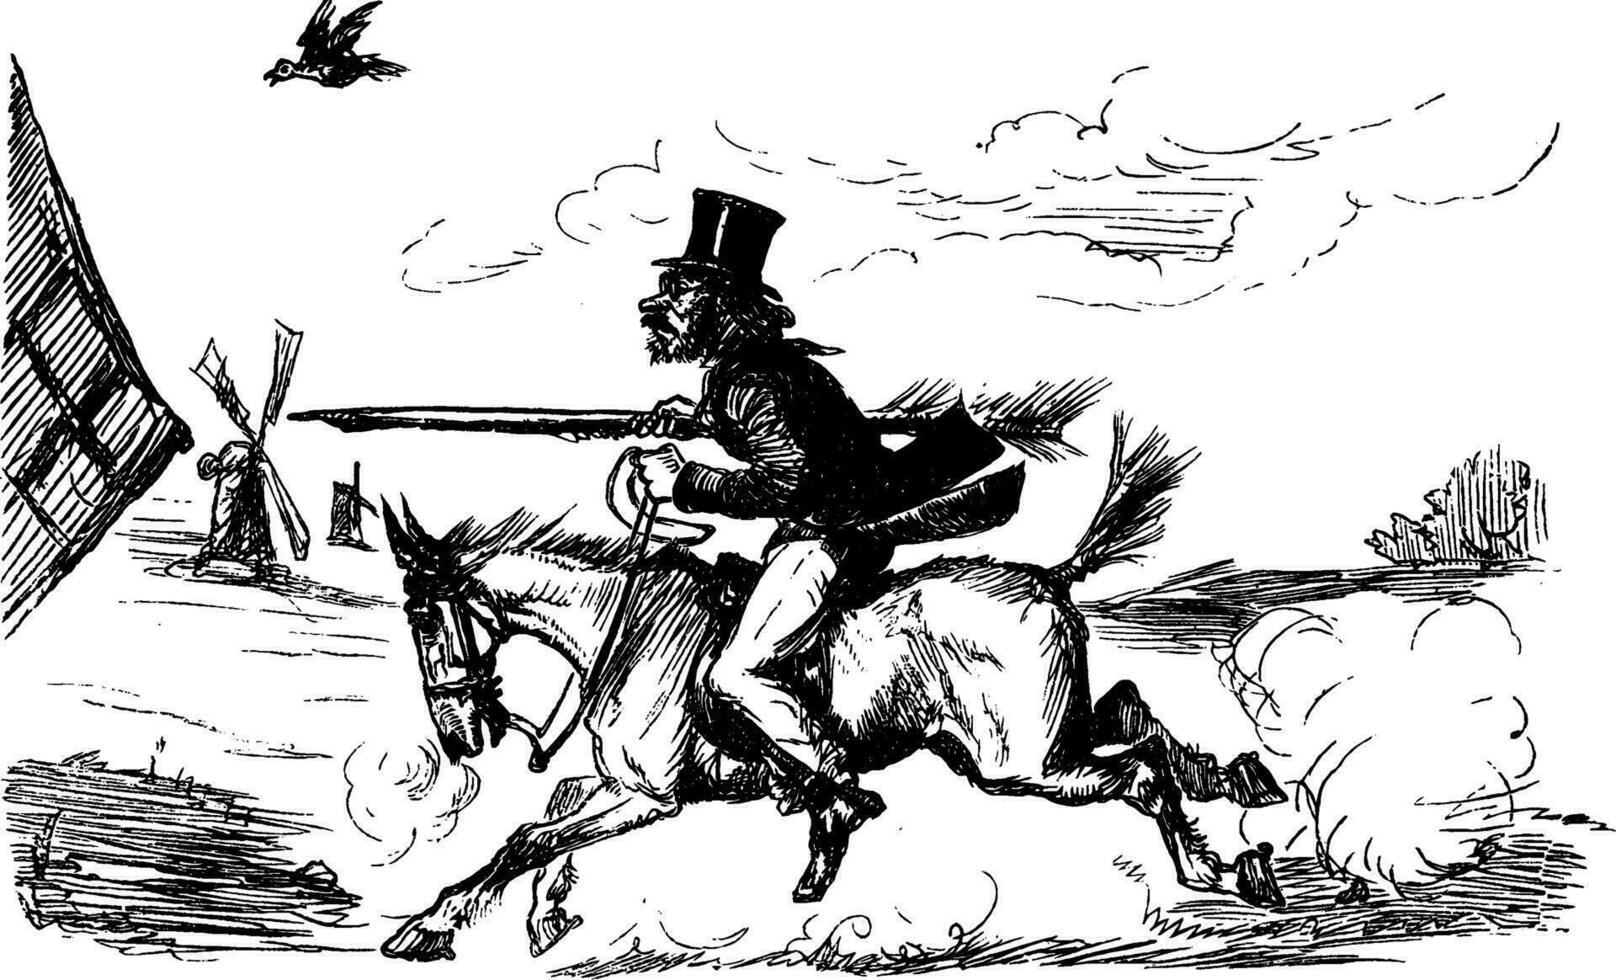 Man and Horse, vintage illustration vector